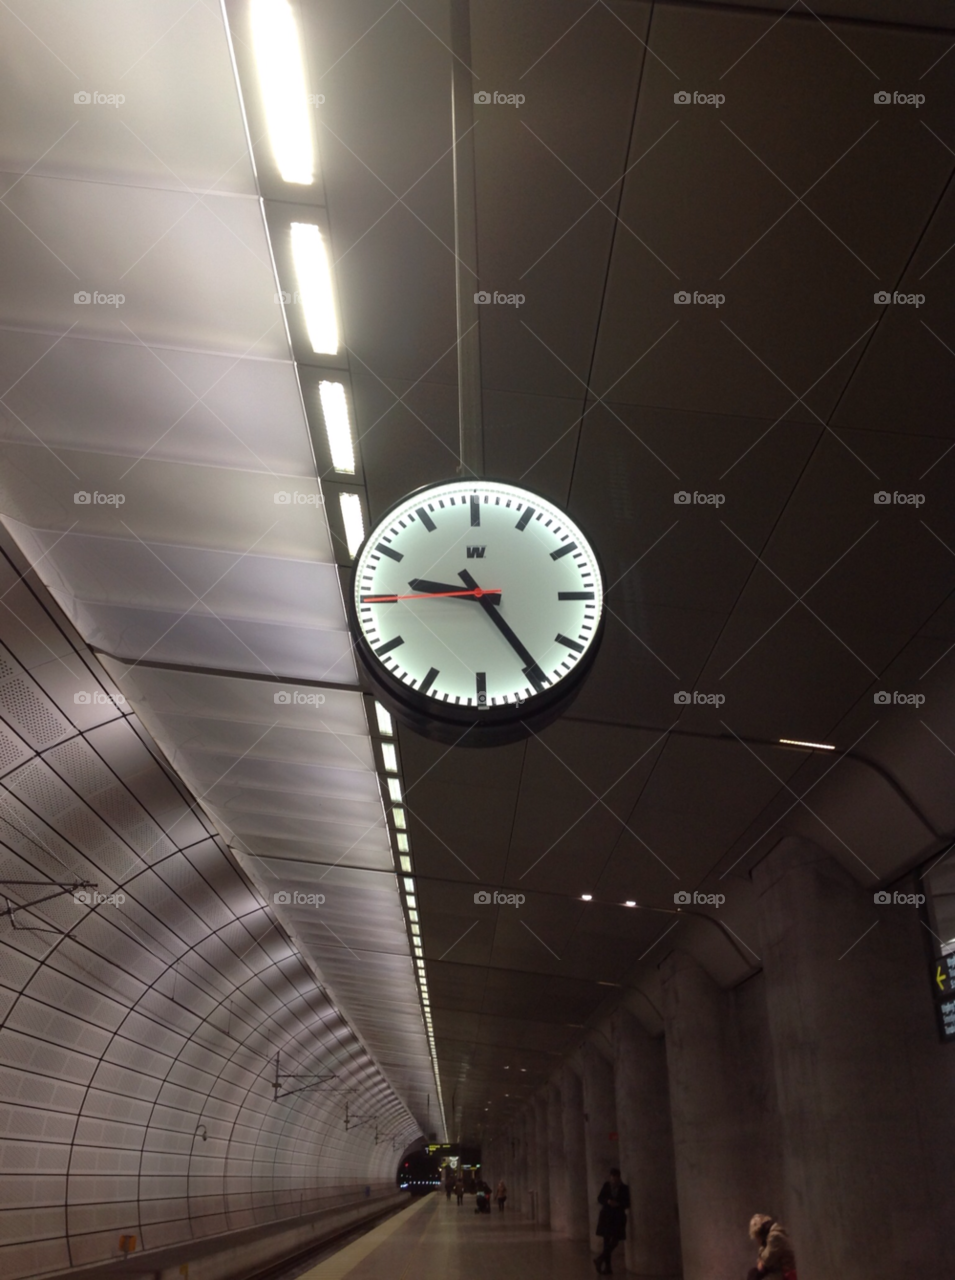 malmö underground clock trainstation by Bizze